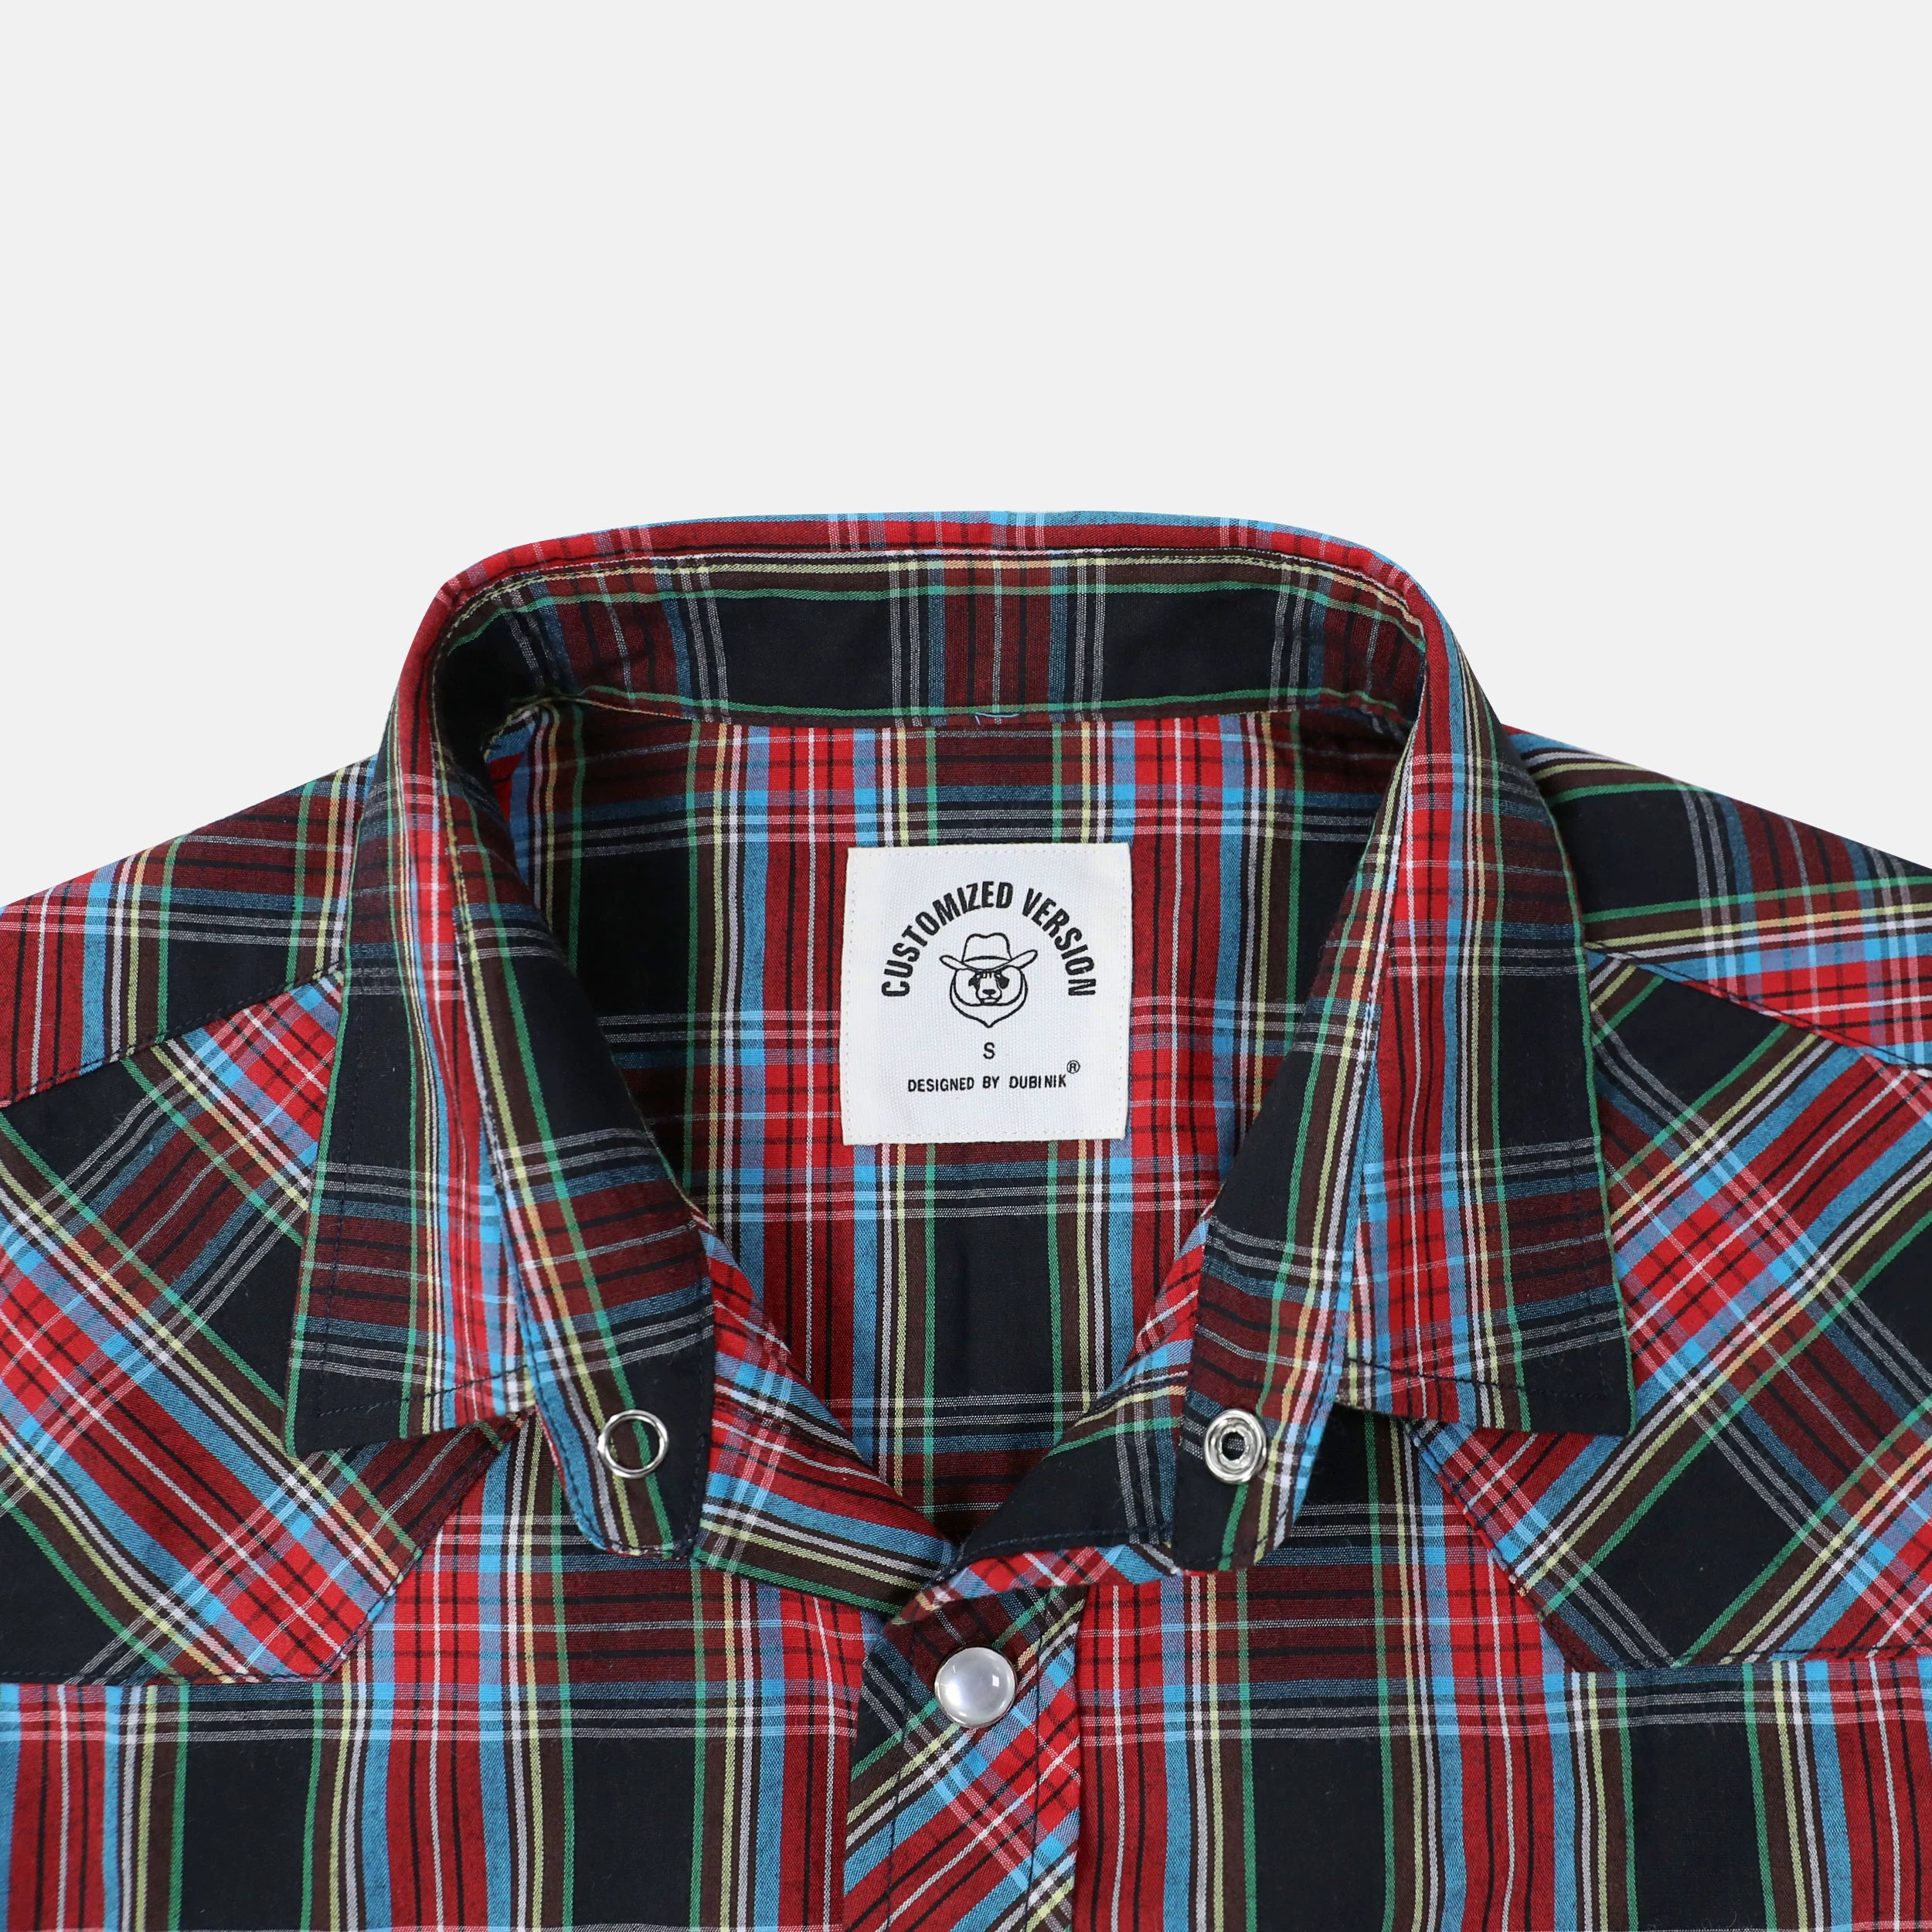 Dubinik® Western Shirts for Men Short Sleeve Plaid Pearl Snap Shirts for Men Button Up Shirt Cowboy Casual Work Shirt#41011